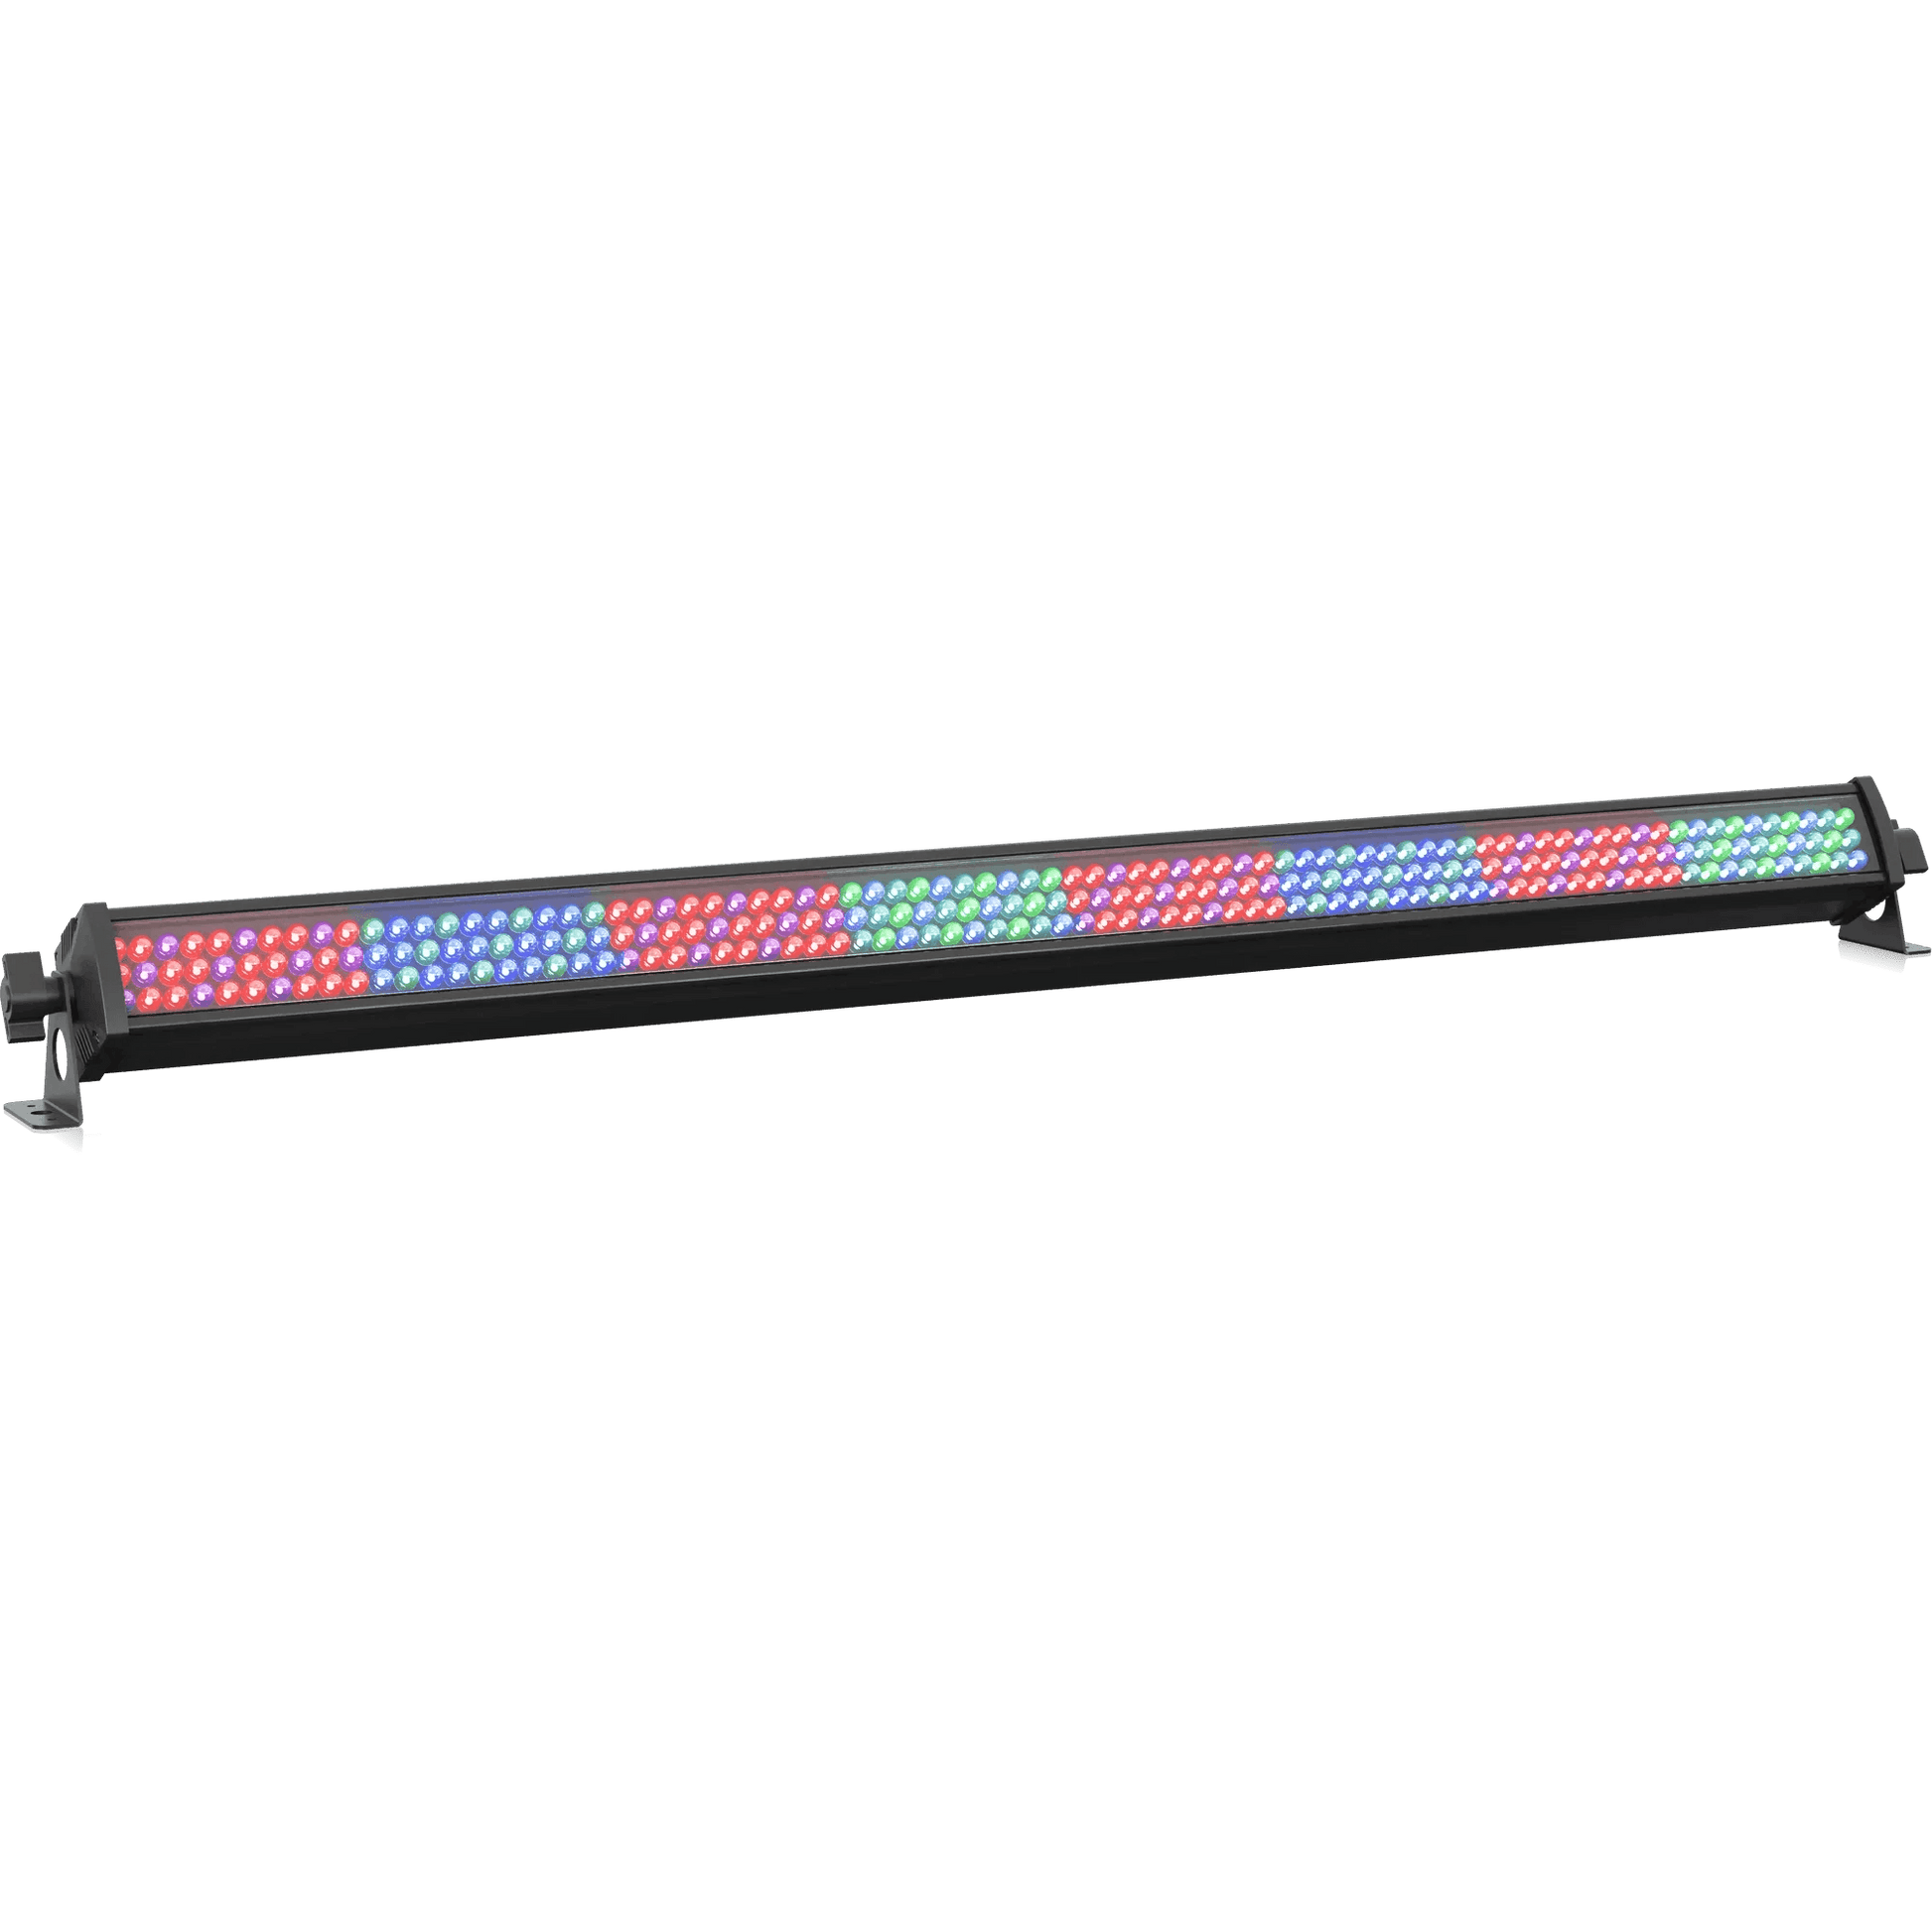 Behringer LED FLOODLIGHT BAR 240-8 RGB